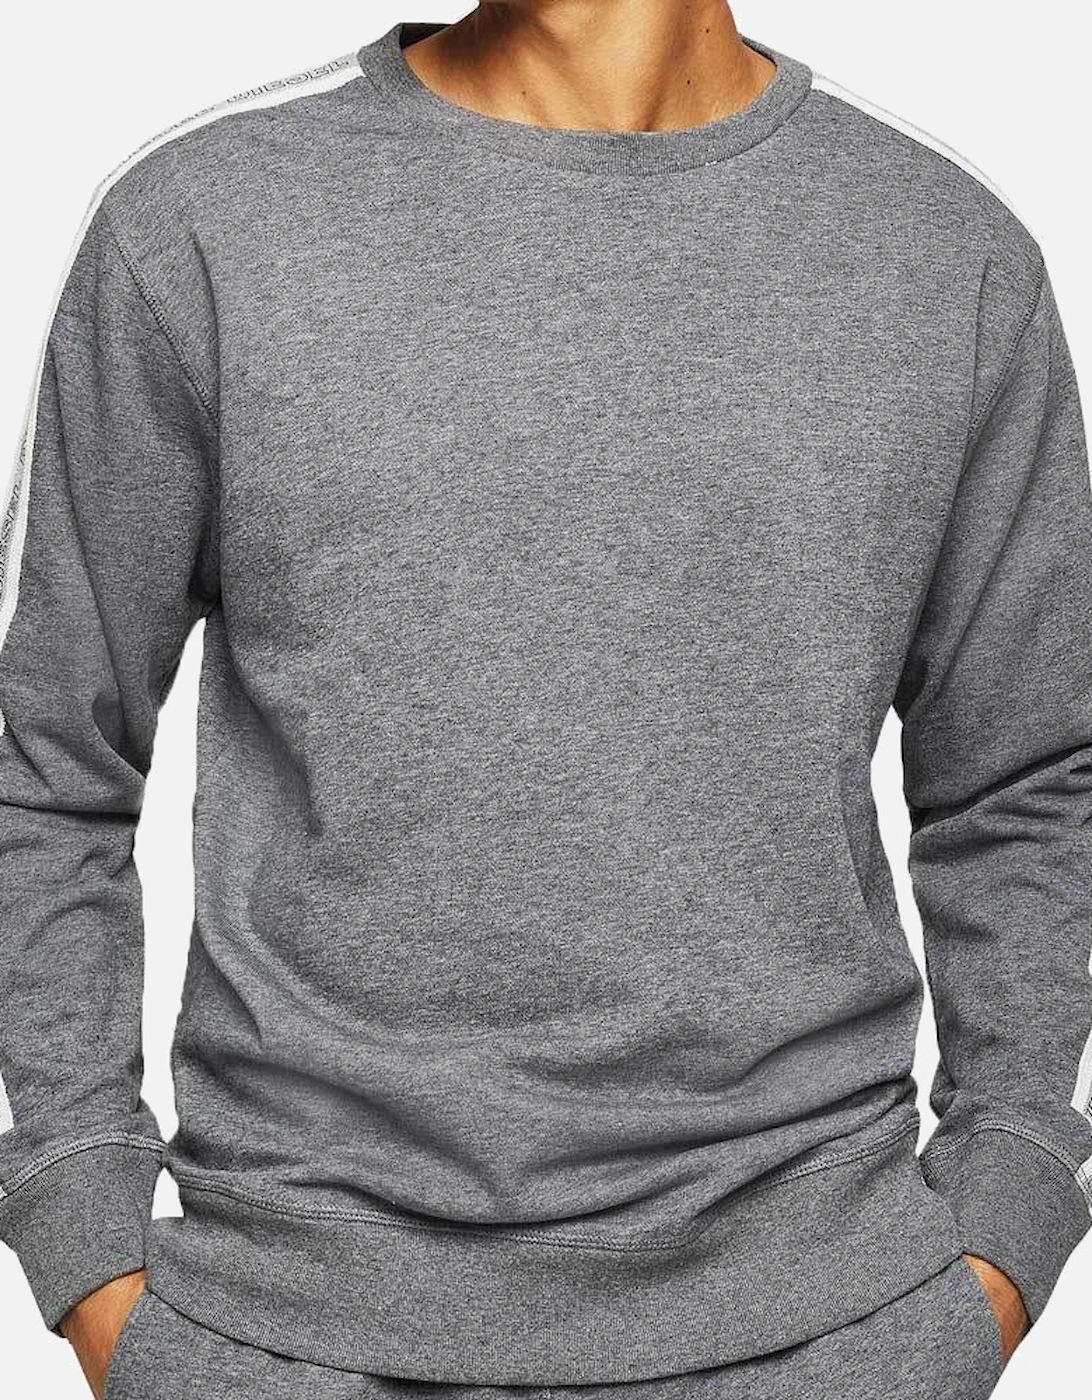 UMLT-Willy Taped Logo Lounge Sweatshirt - Grey